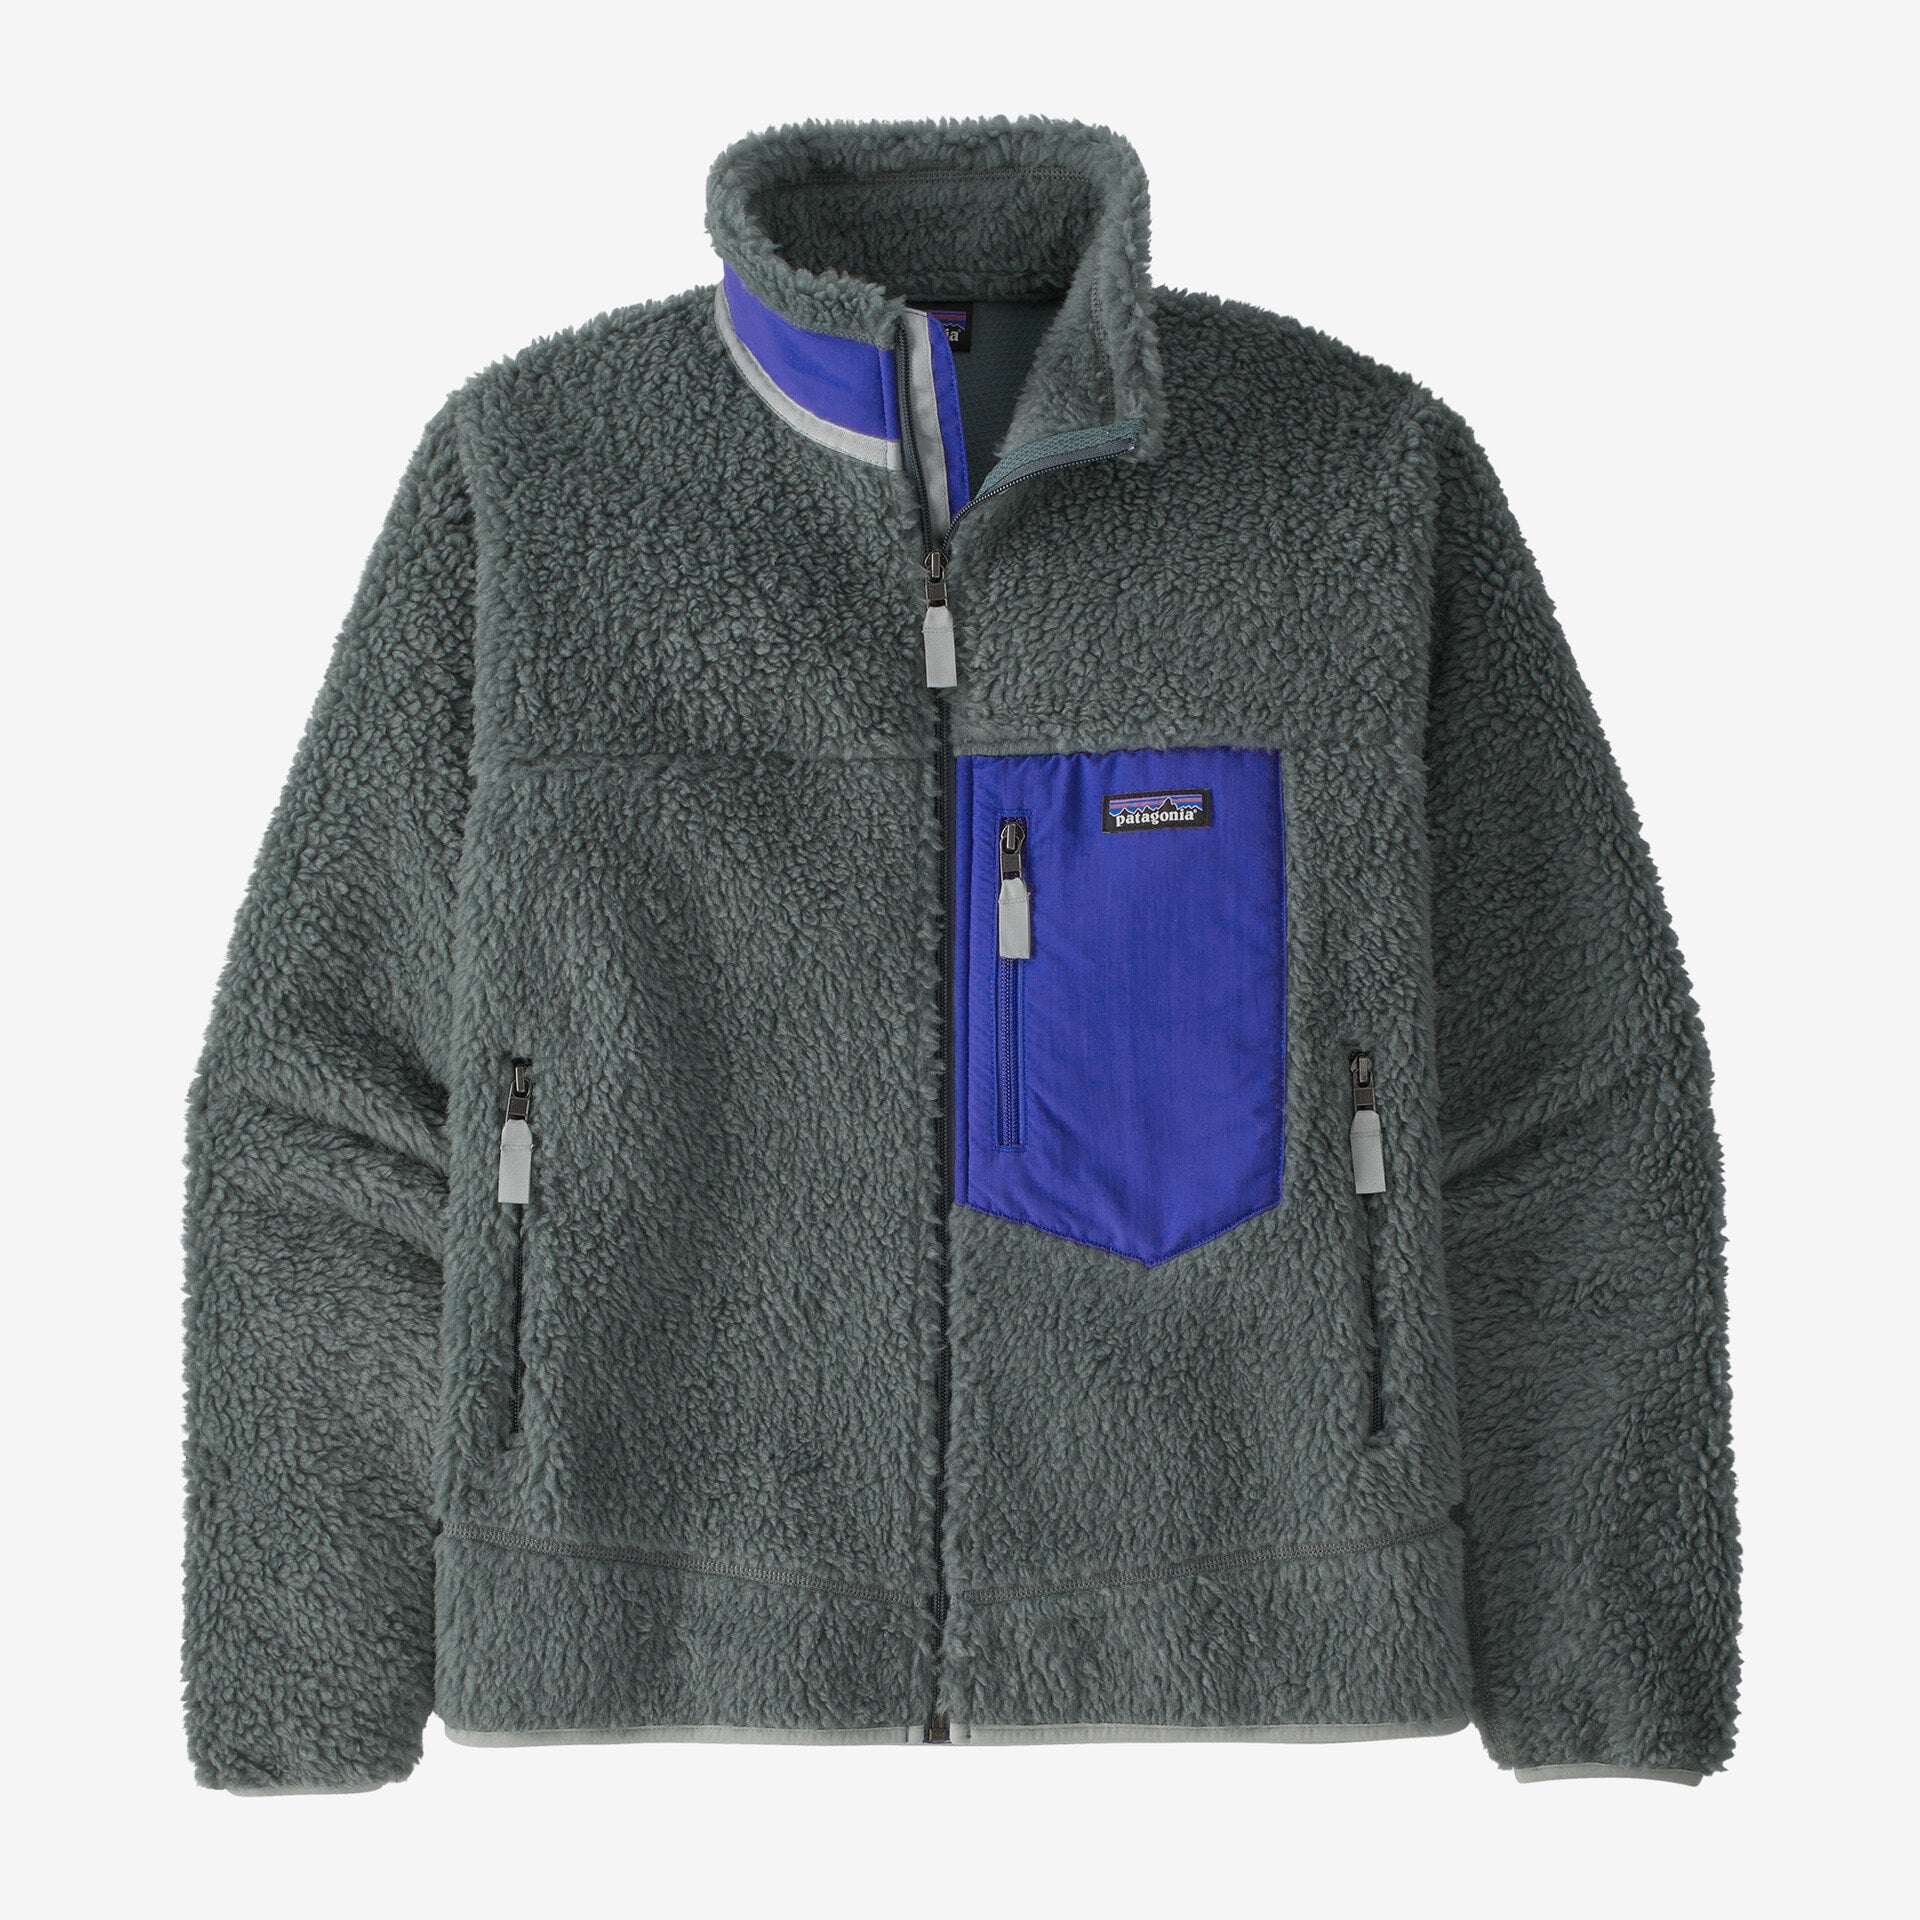 Patagonia Men's Classic Retro-X Fleece Jacket (Past Season